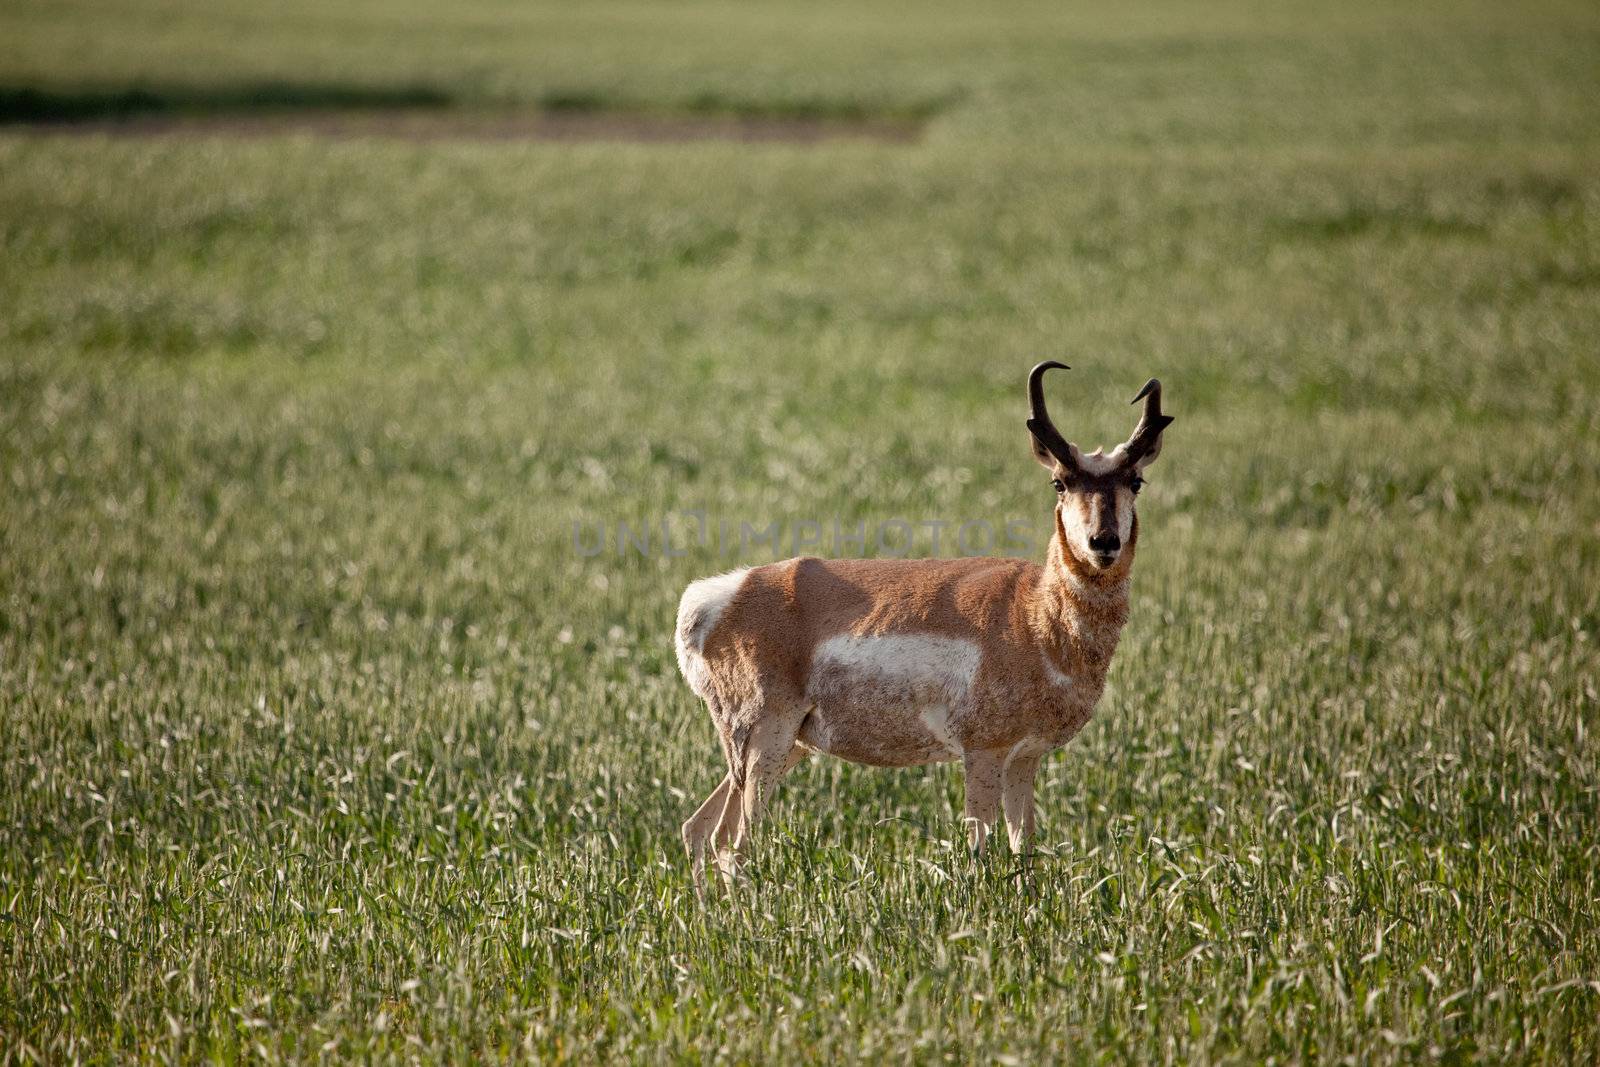 Pronghorn antelope in a field in rural Saskatchean.